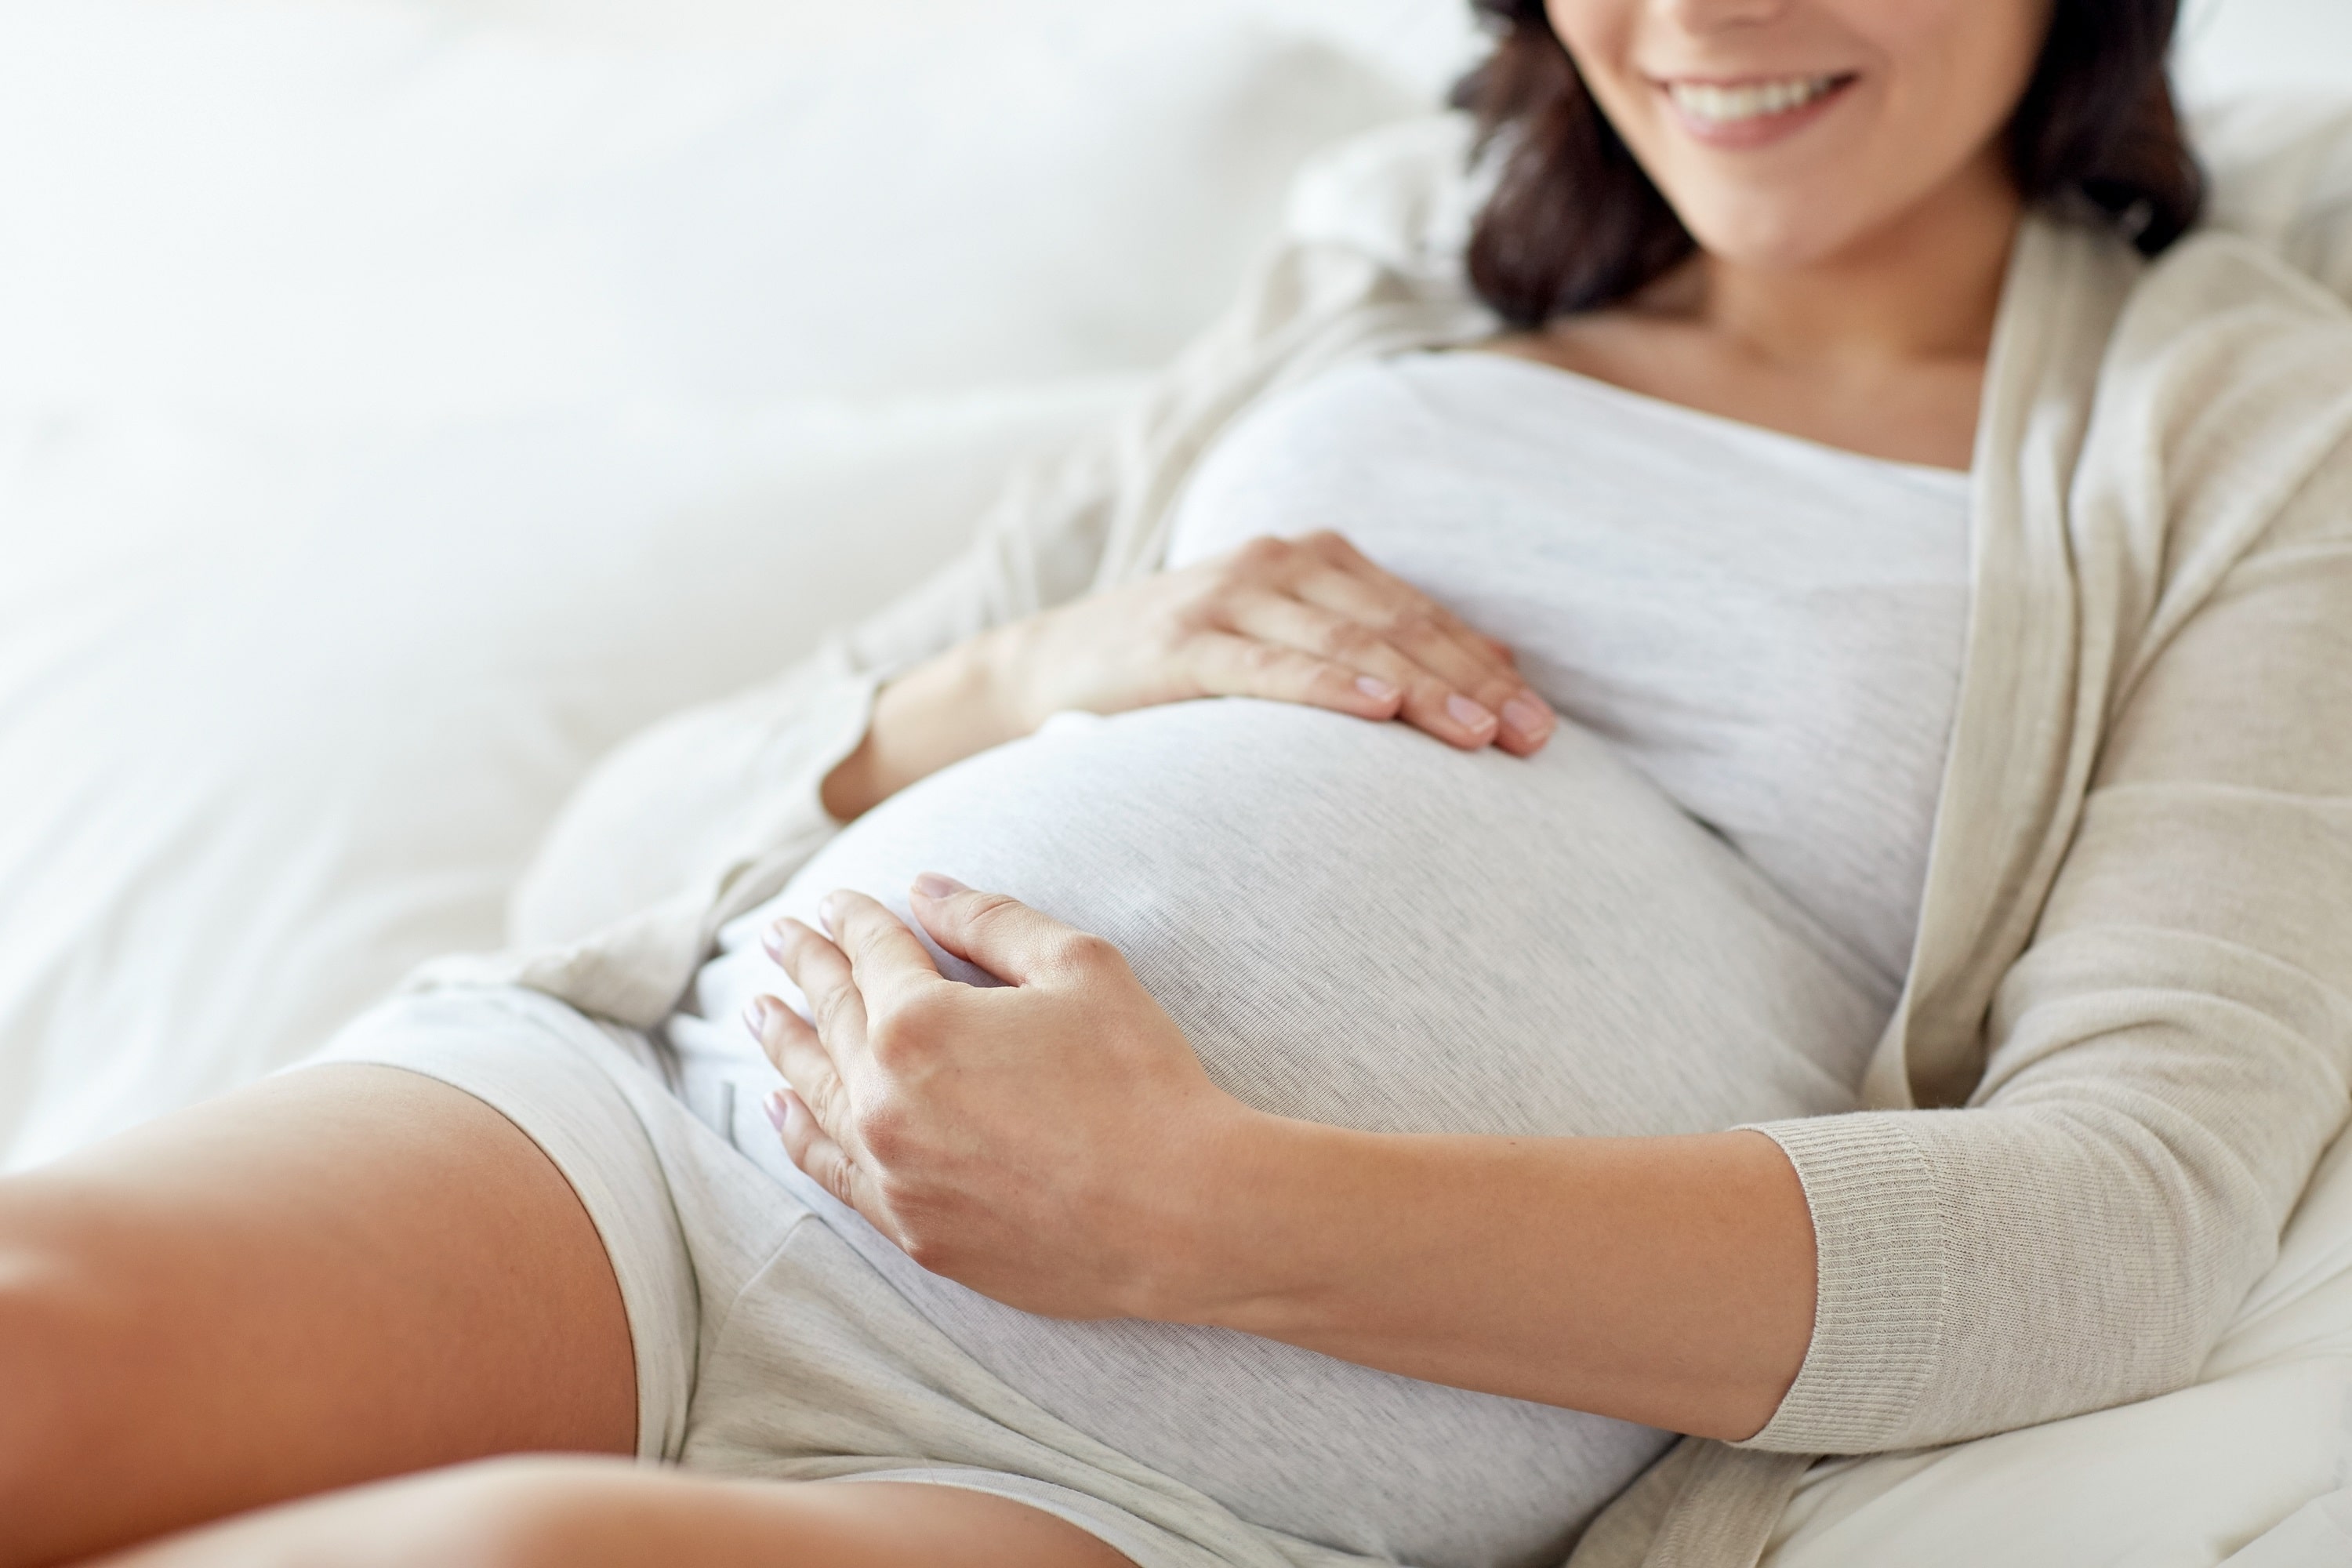 polycystic ovarian syndrome pregnancy symptoms